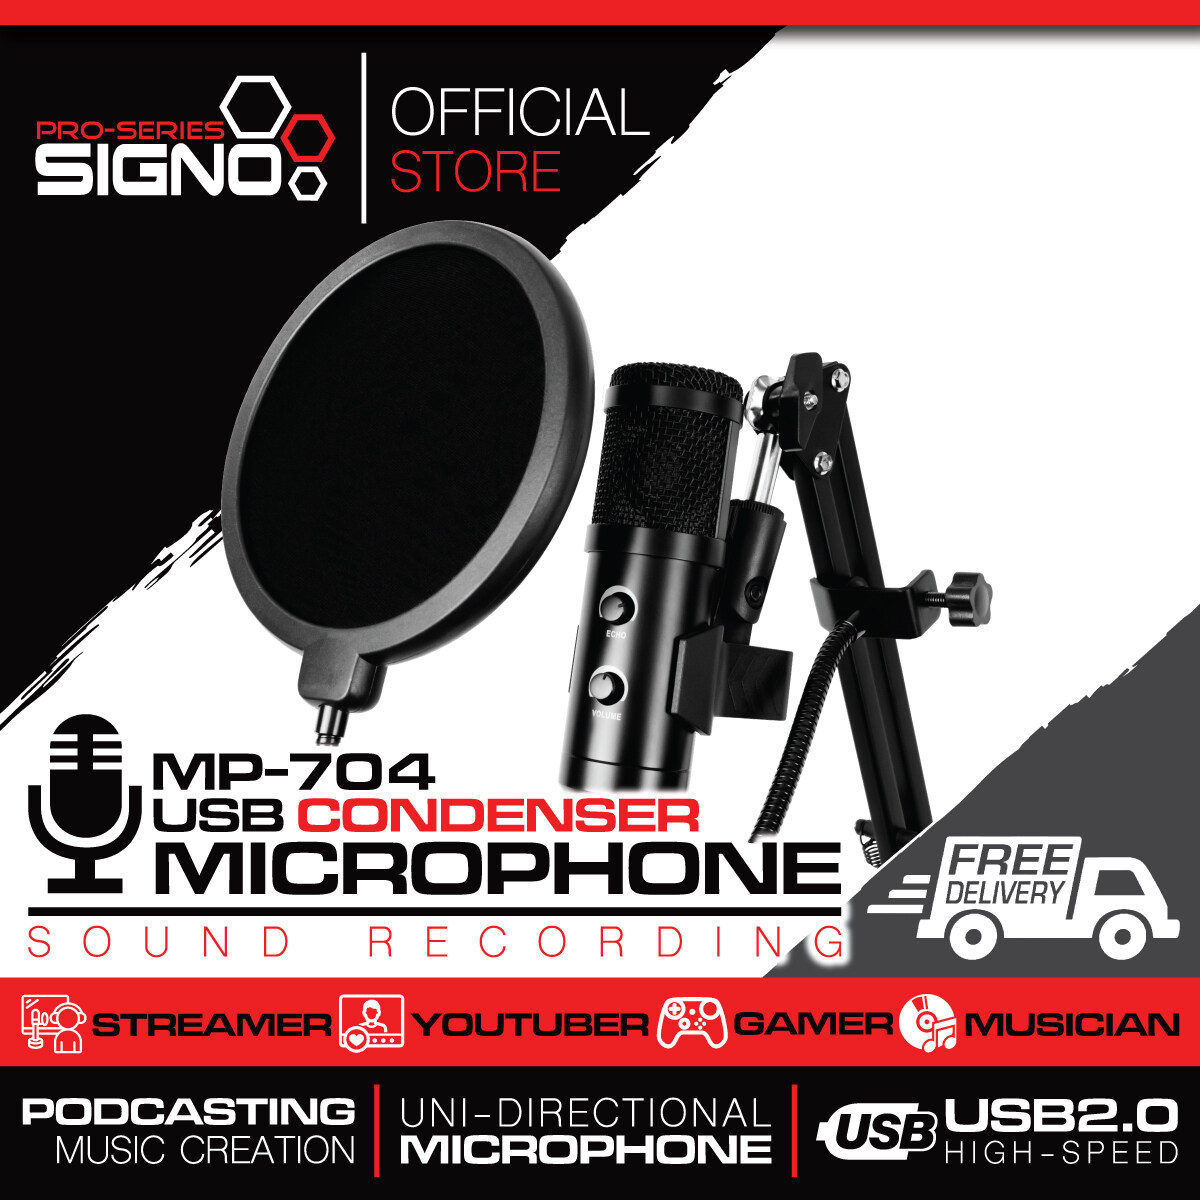 Signo USB Condenser Microphone Sound Recording รุ่น MP-704 (ไมค์โครโฟน)